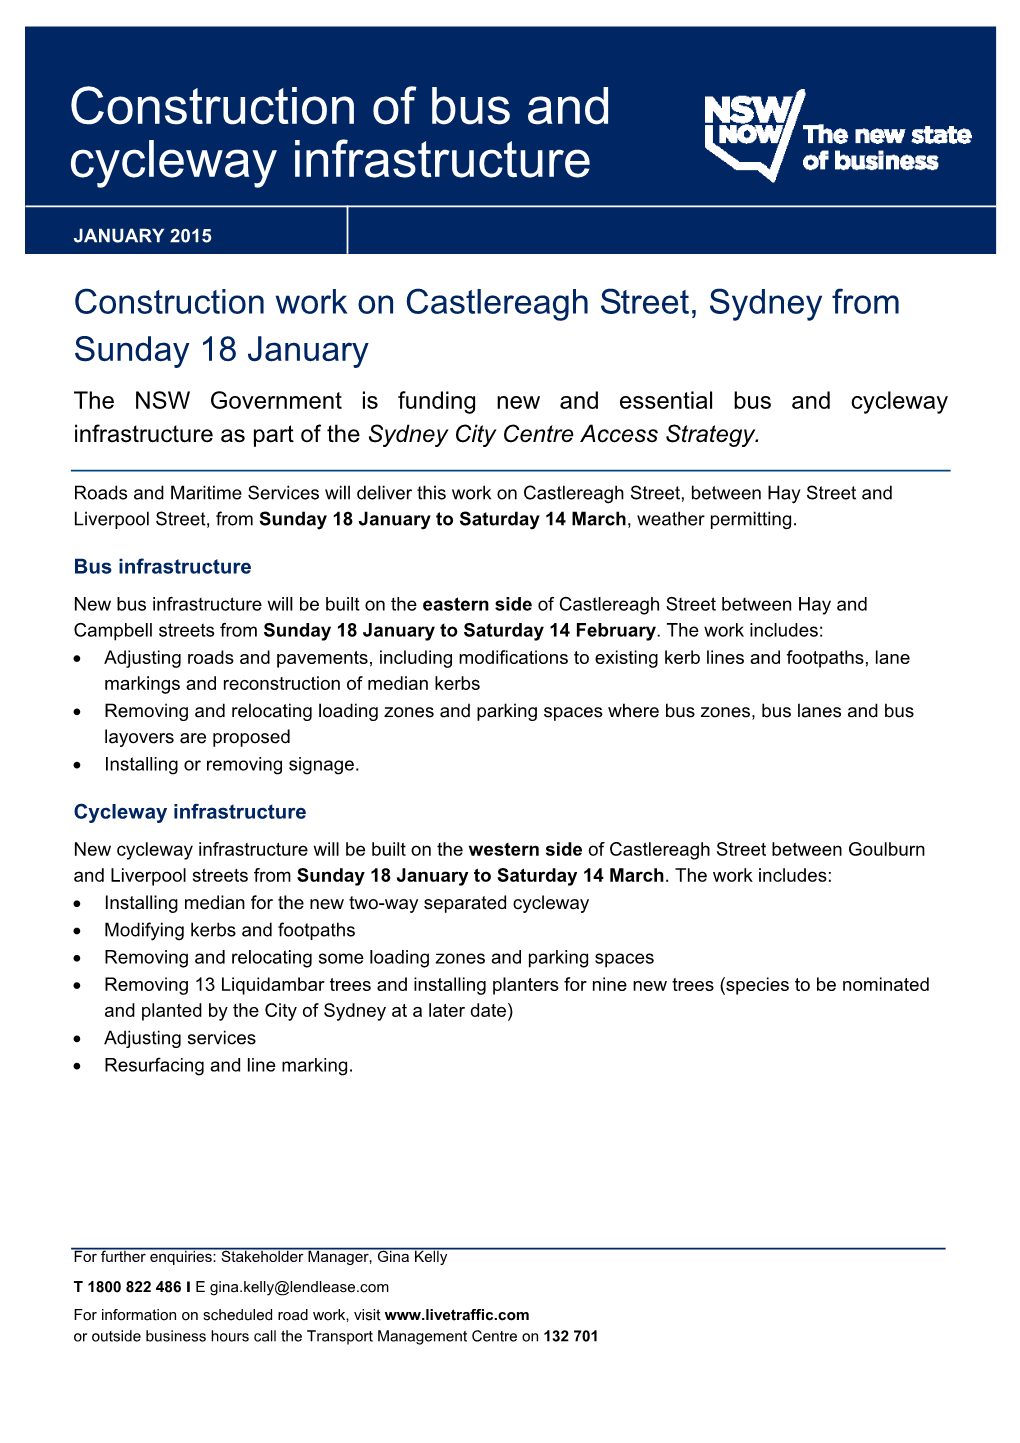 Construction Work on Castlereagh Street, Sydney from Sunday 18